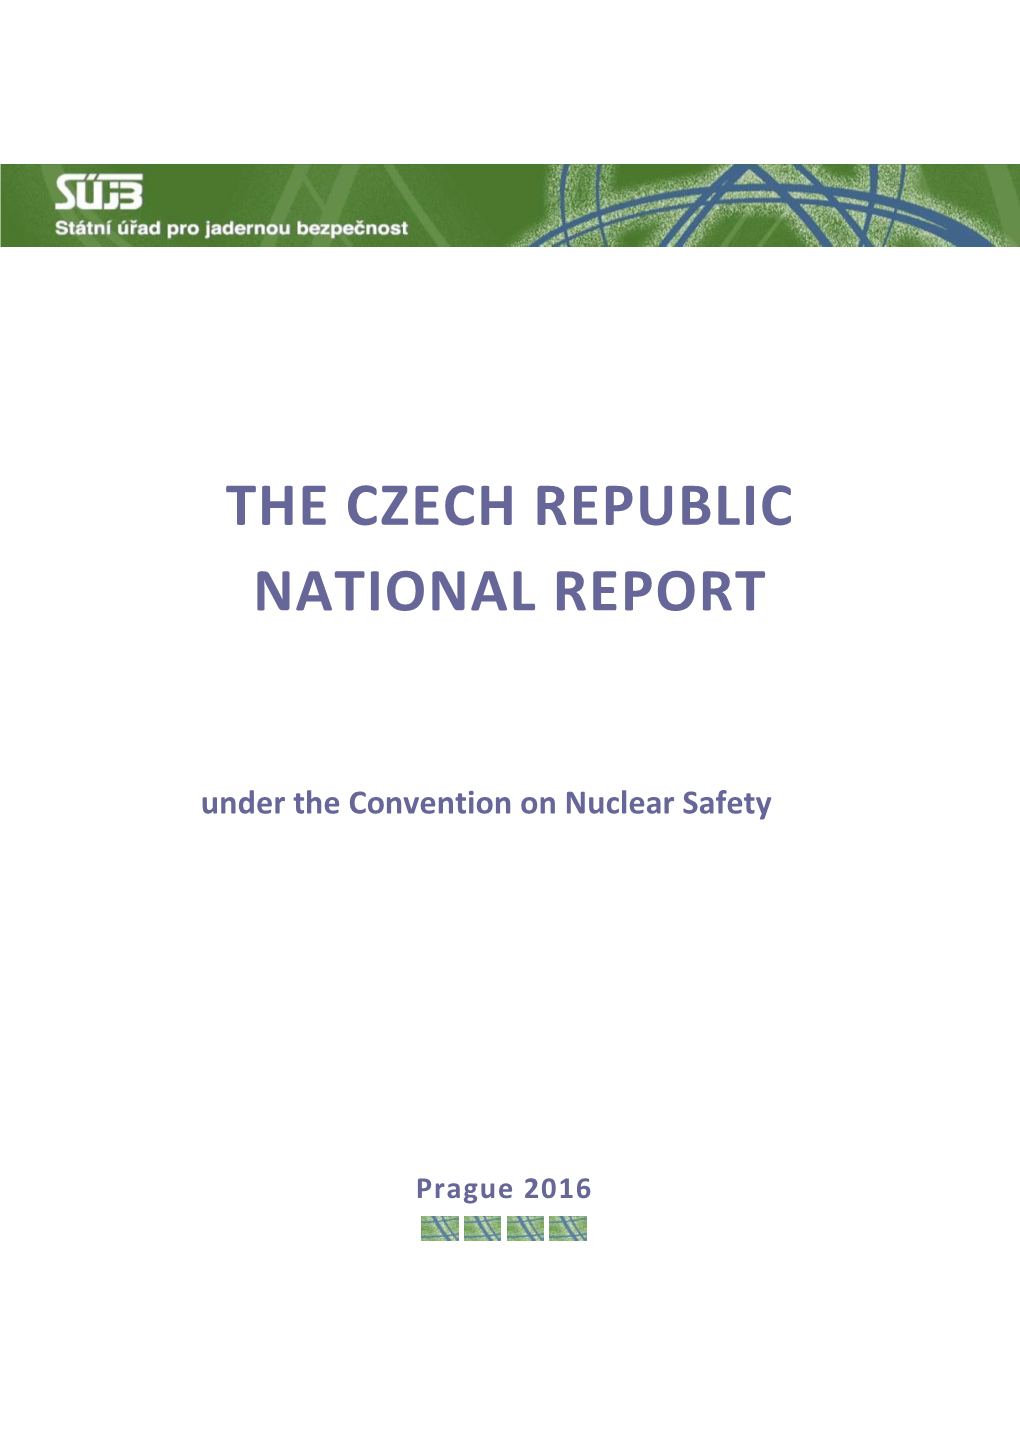 The Czech Republic National Report